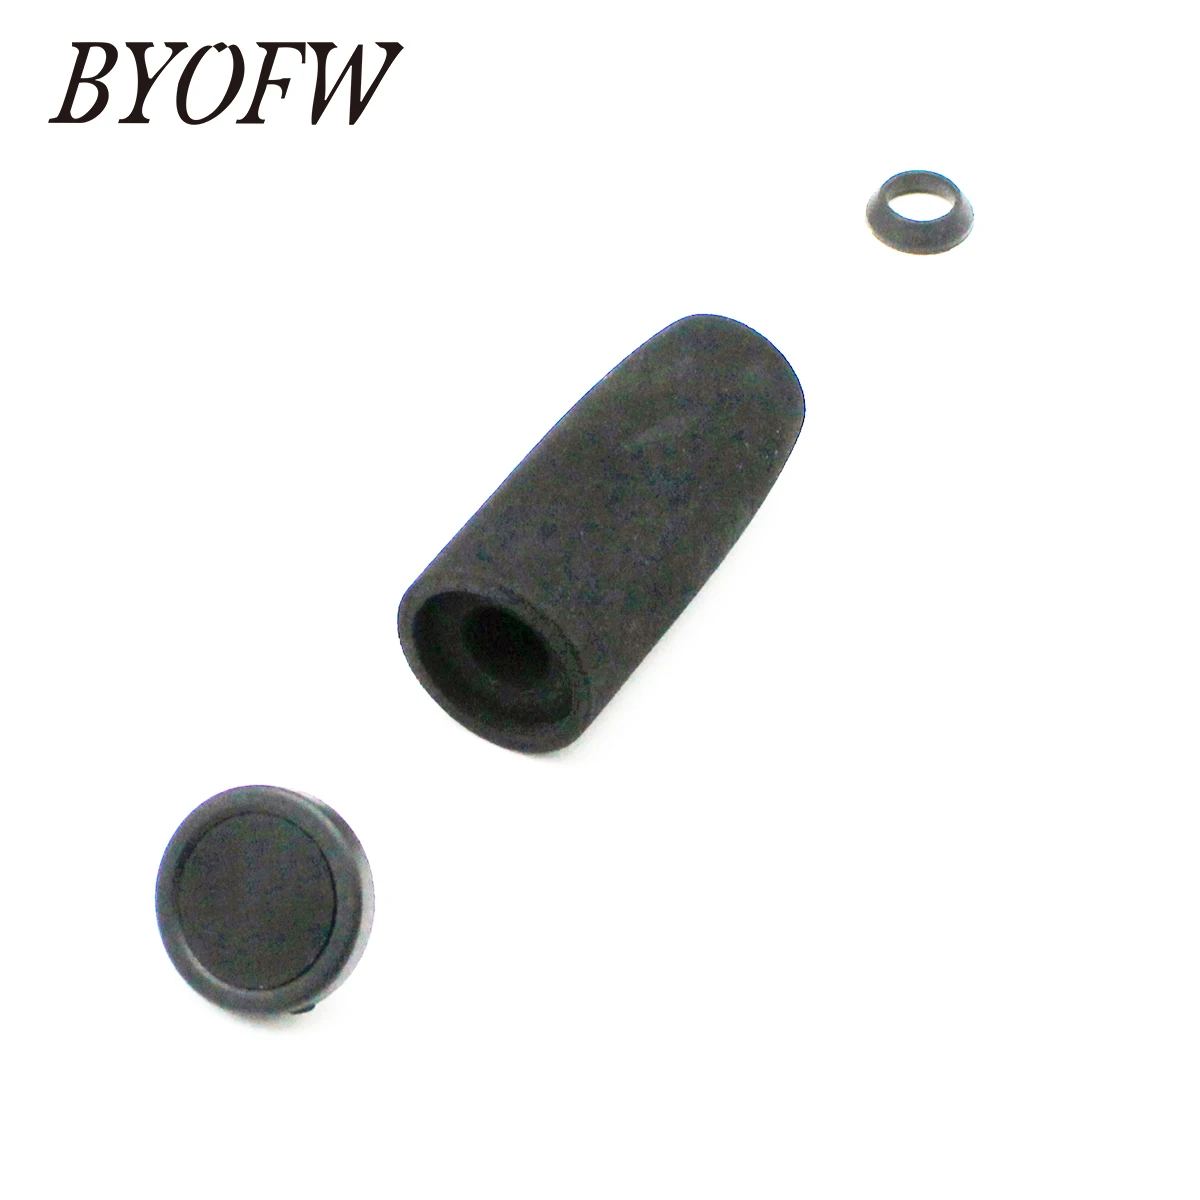 https://ae01.alicdn.com/kf/S77f63f964aaa45cf86dea5d60ca044b8U/BYOFW-1-Piece-Black-EVA-Foam-Fishing-Rod-Butt-Handle-Grip-With-Aluminum-And-PVC-Decorative.jpg